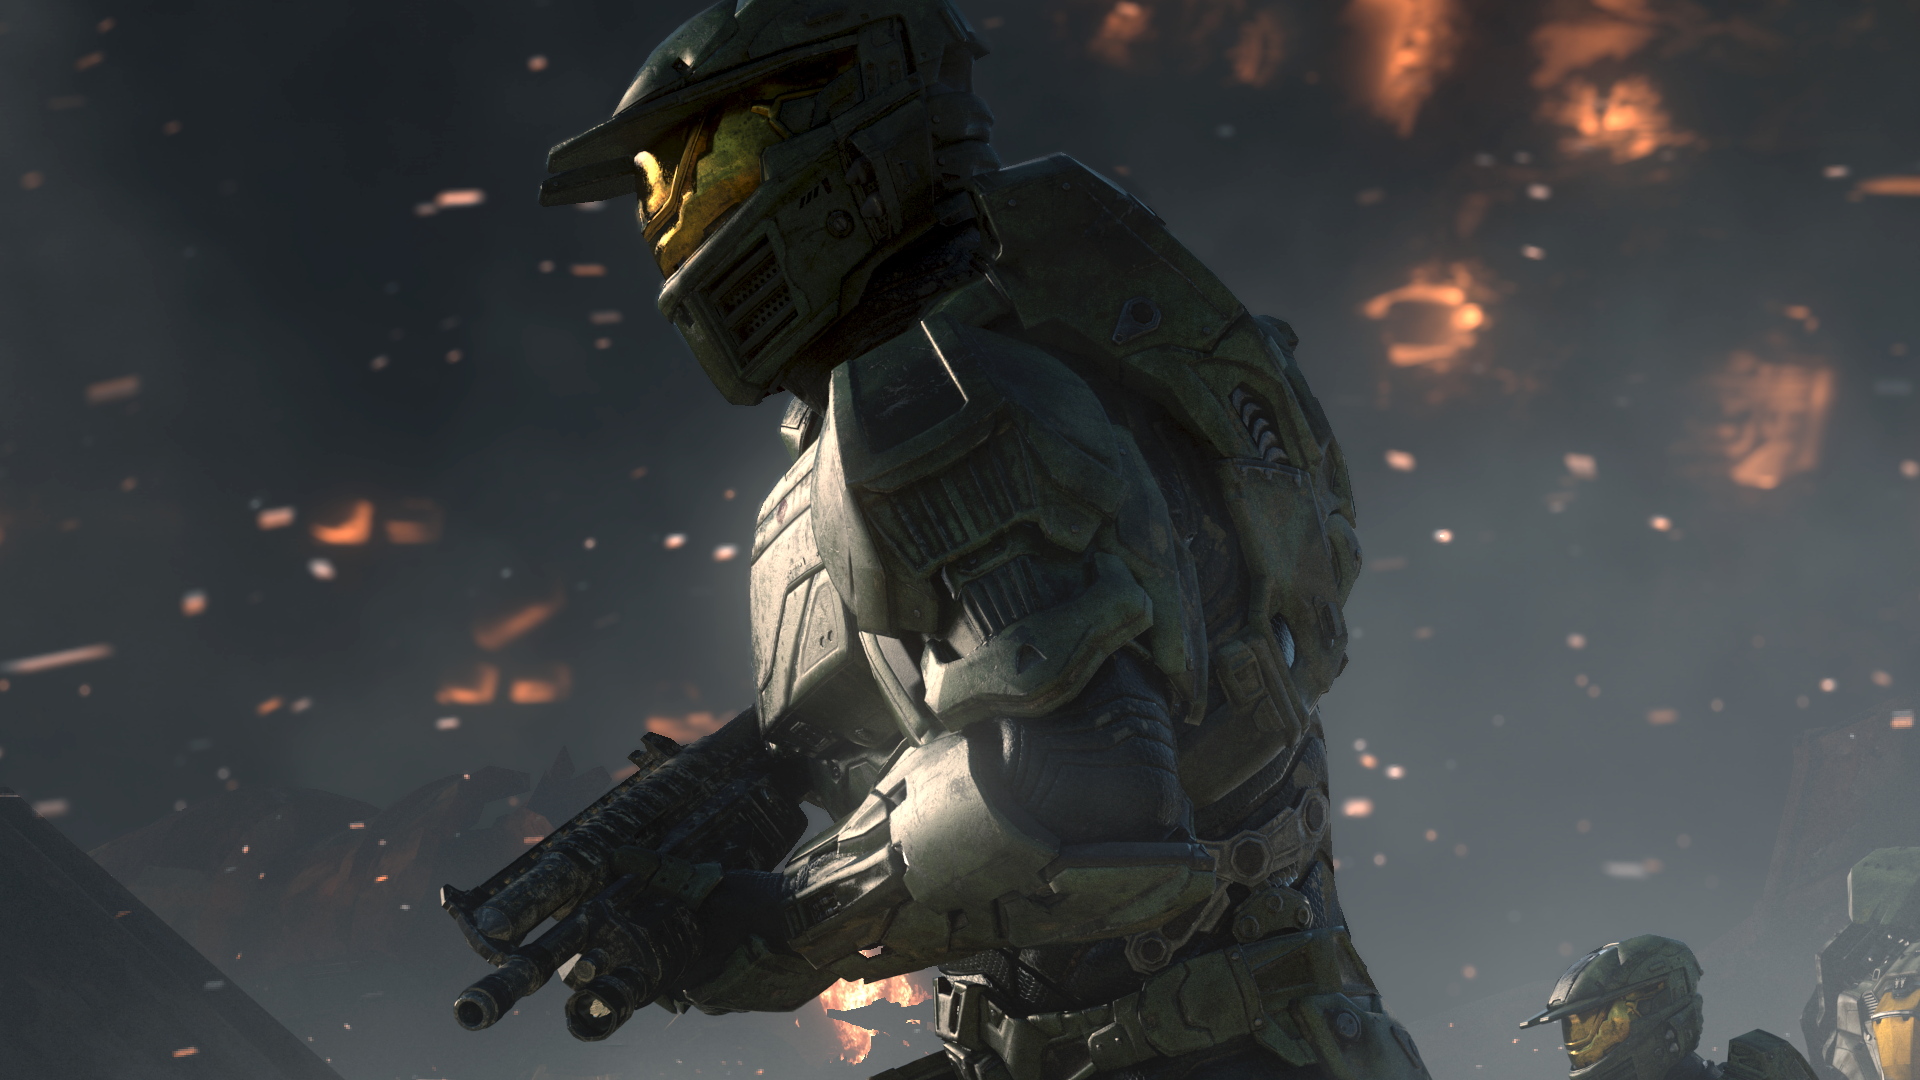 Halo Wars Background